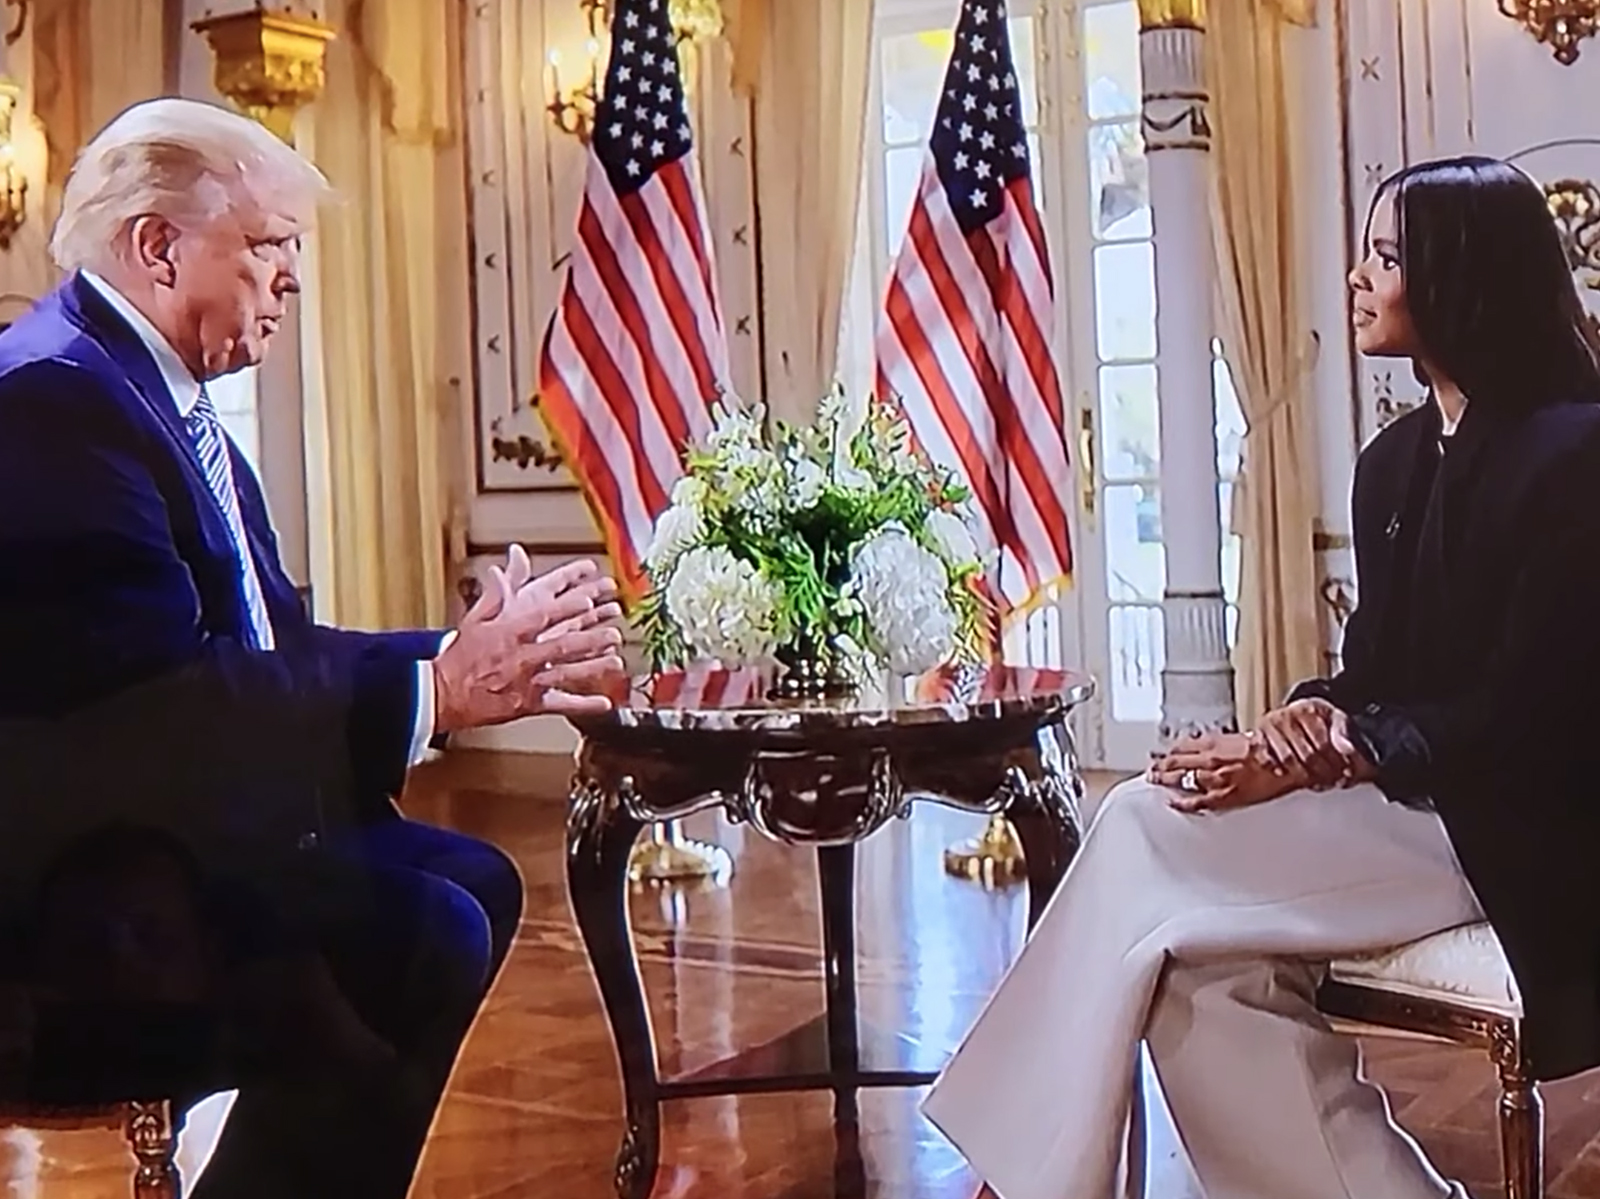 Candace Owens interviews former President Donald Trump. Video screen grab